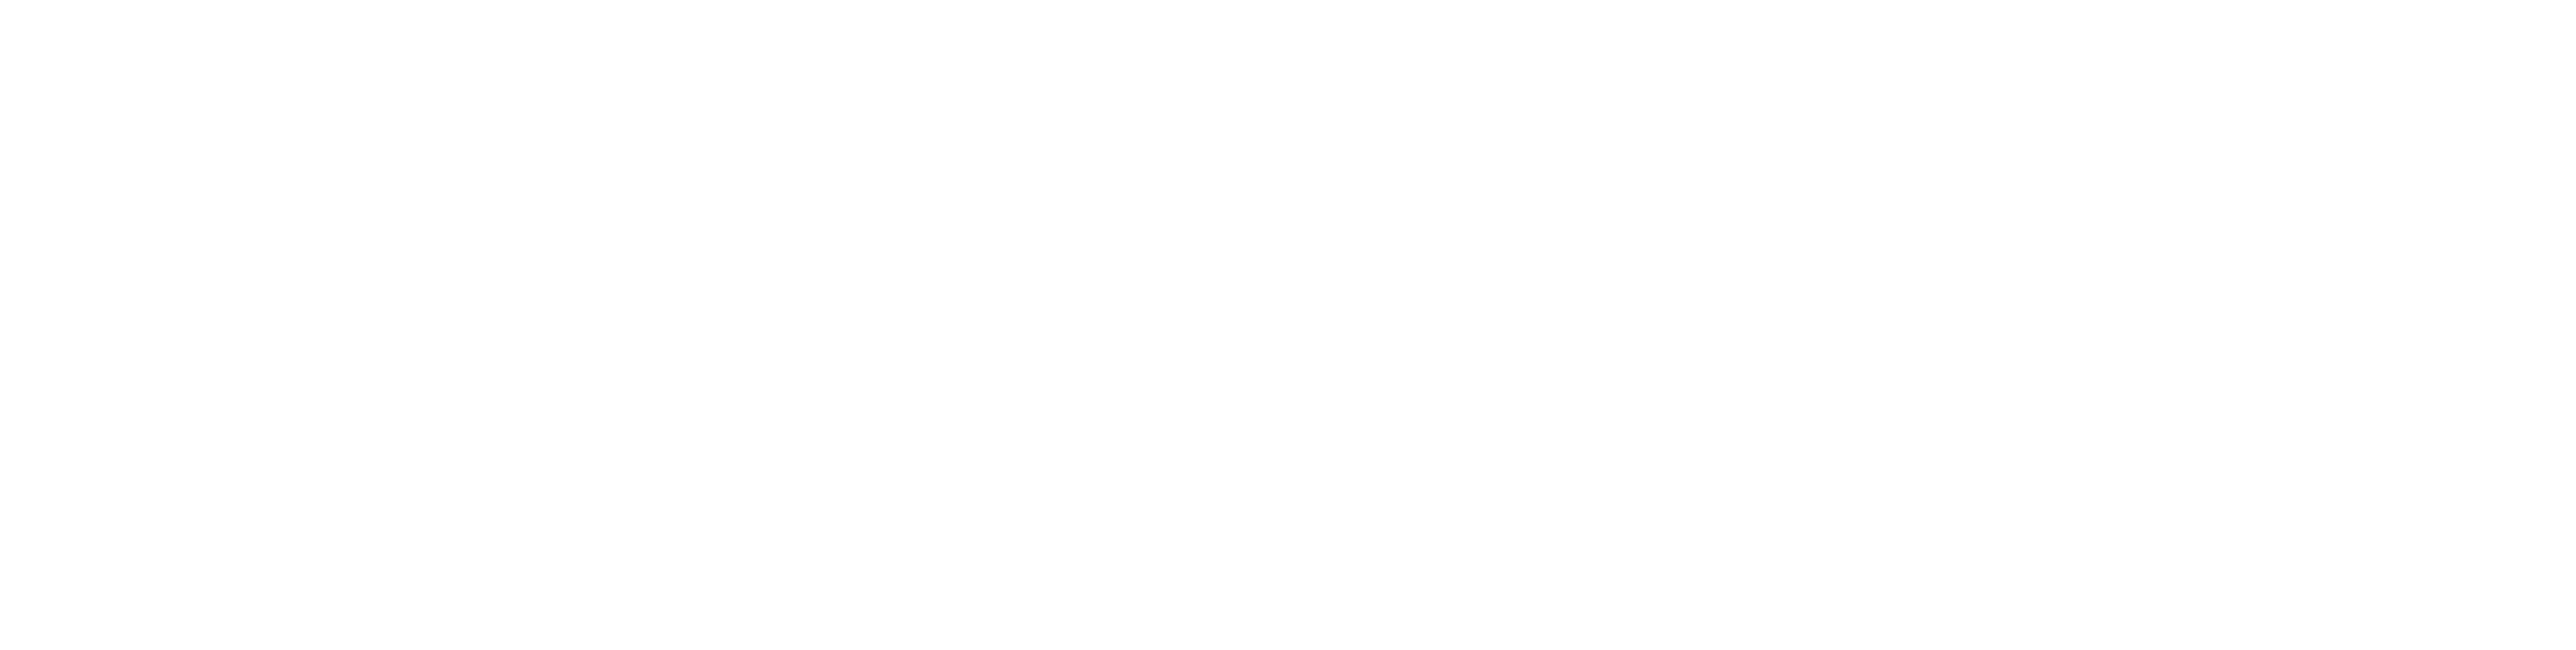 Envirotech for Shipping Forum